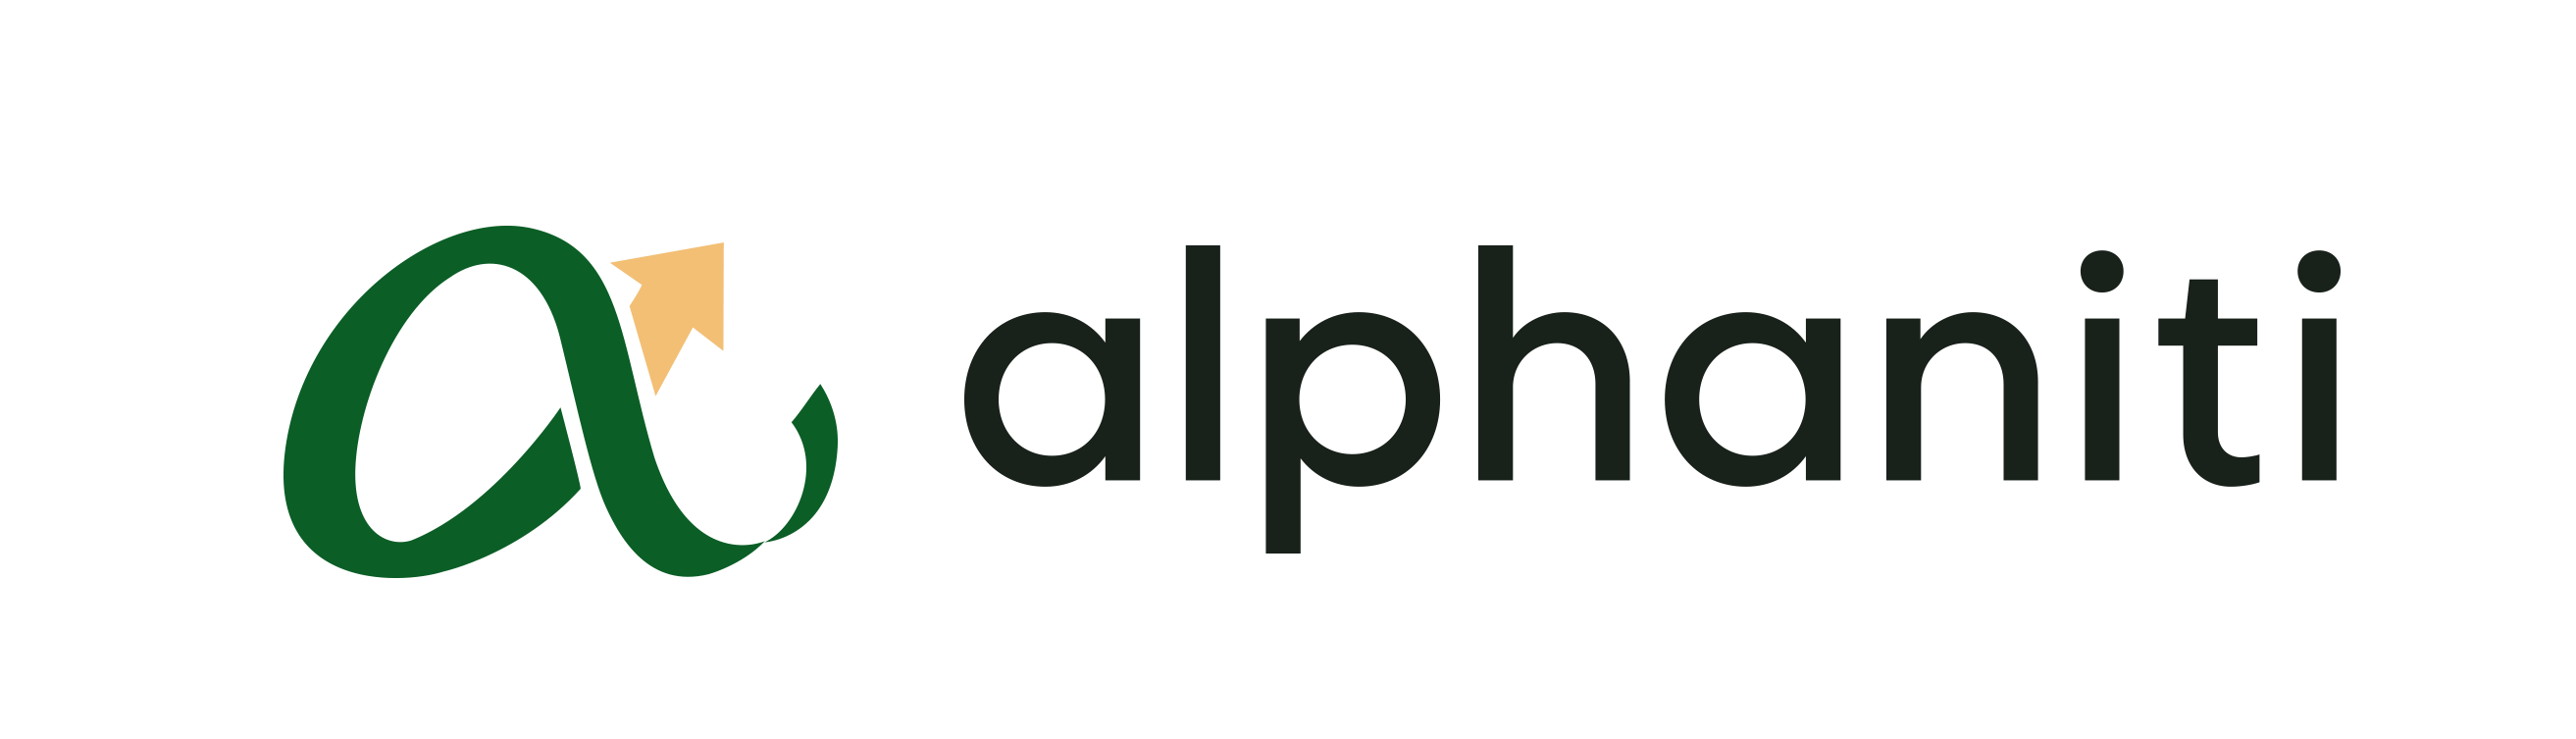 Alphaniti logo